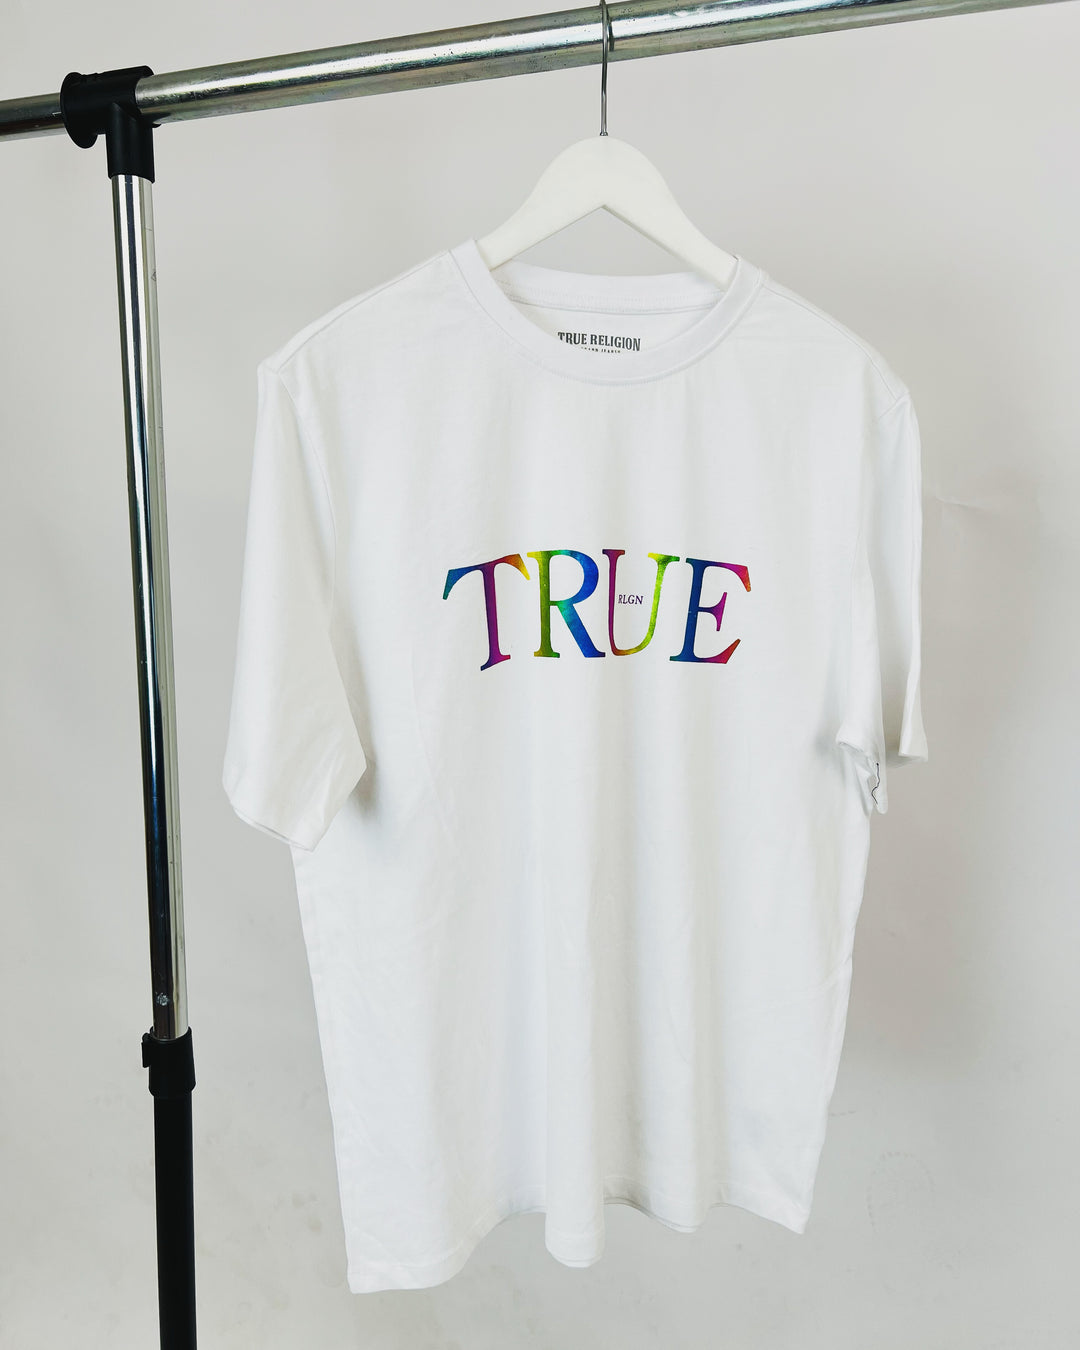 True Religion Print T-shirt in white